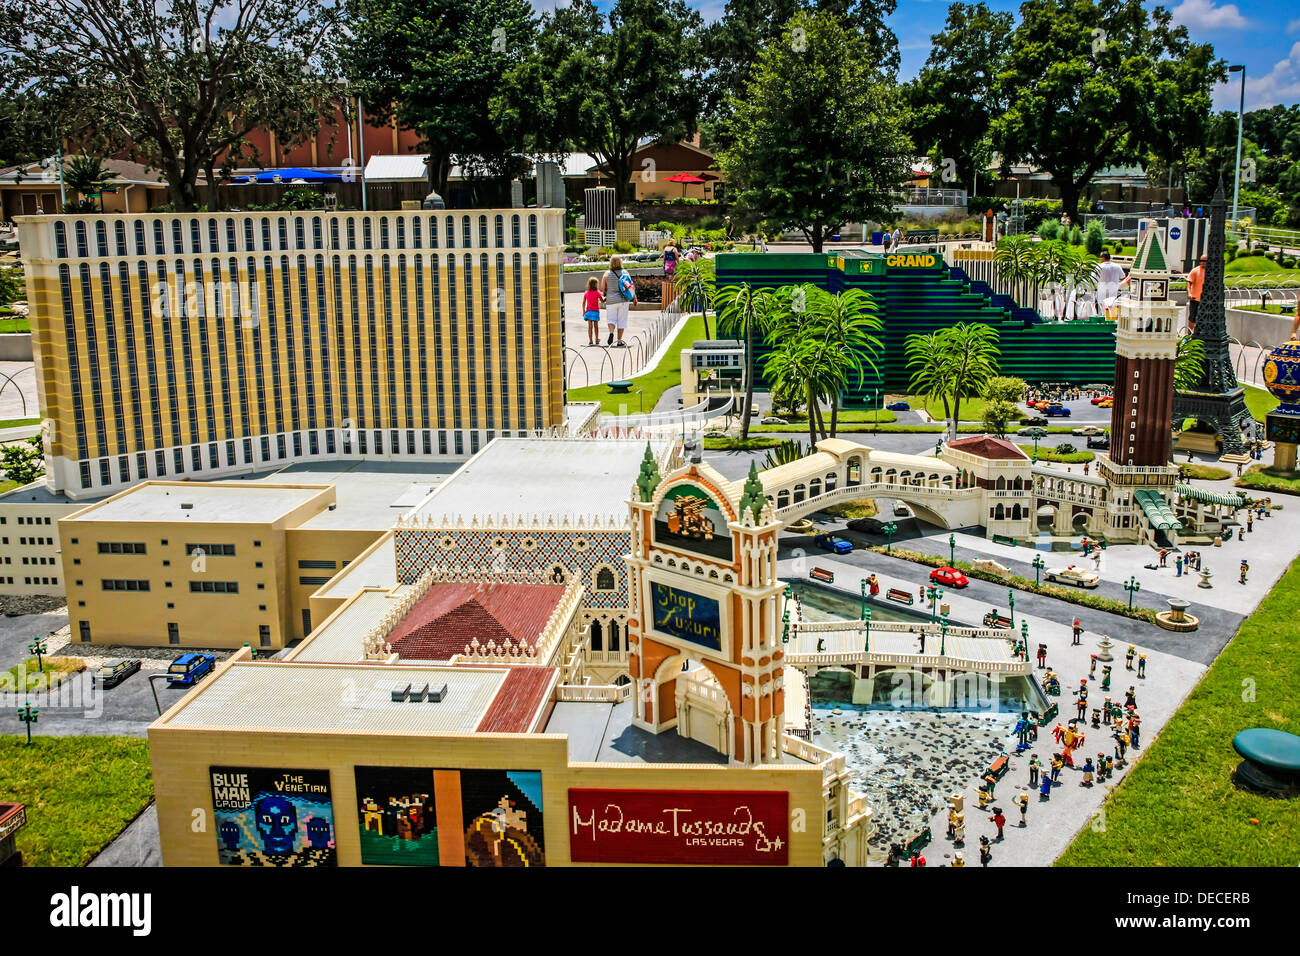 File:Las Vegas - Legoland California (5341626259).jpg - Wikipedia